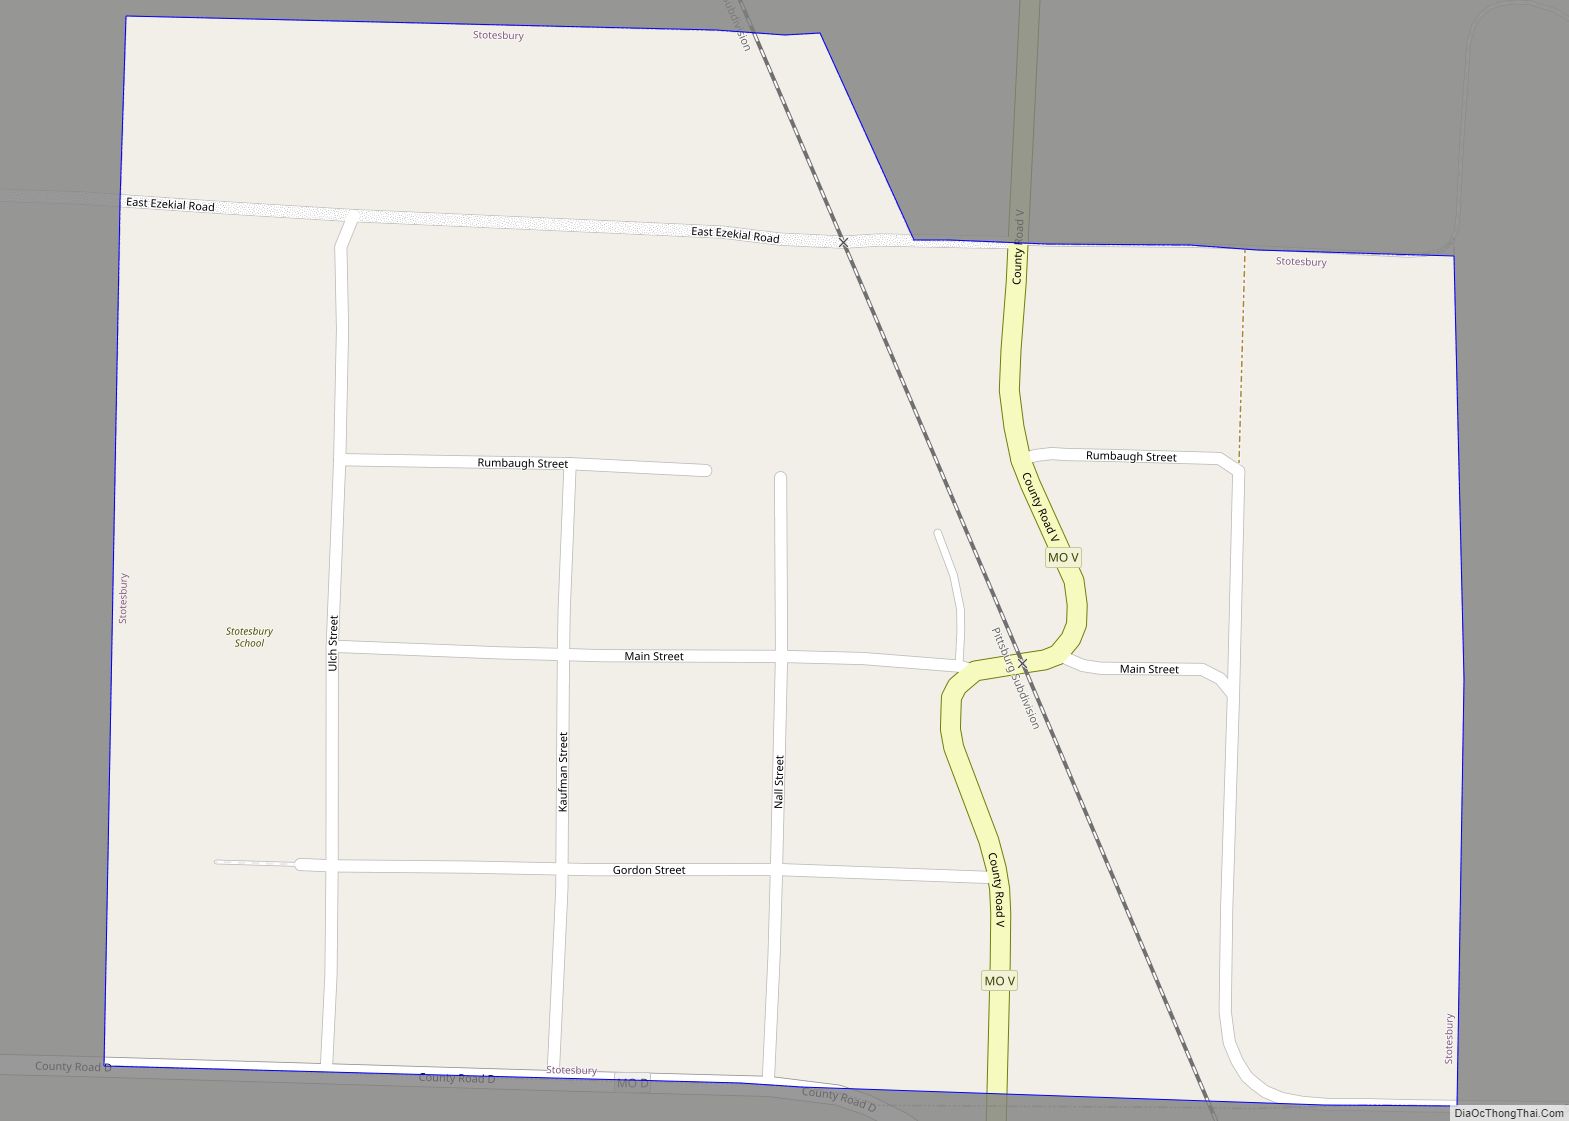 Map of Stotesbury town